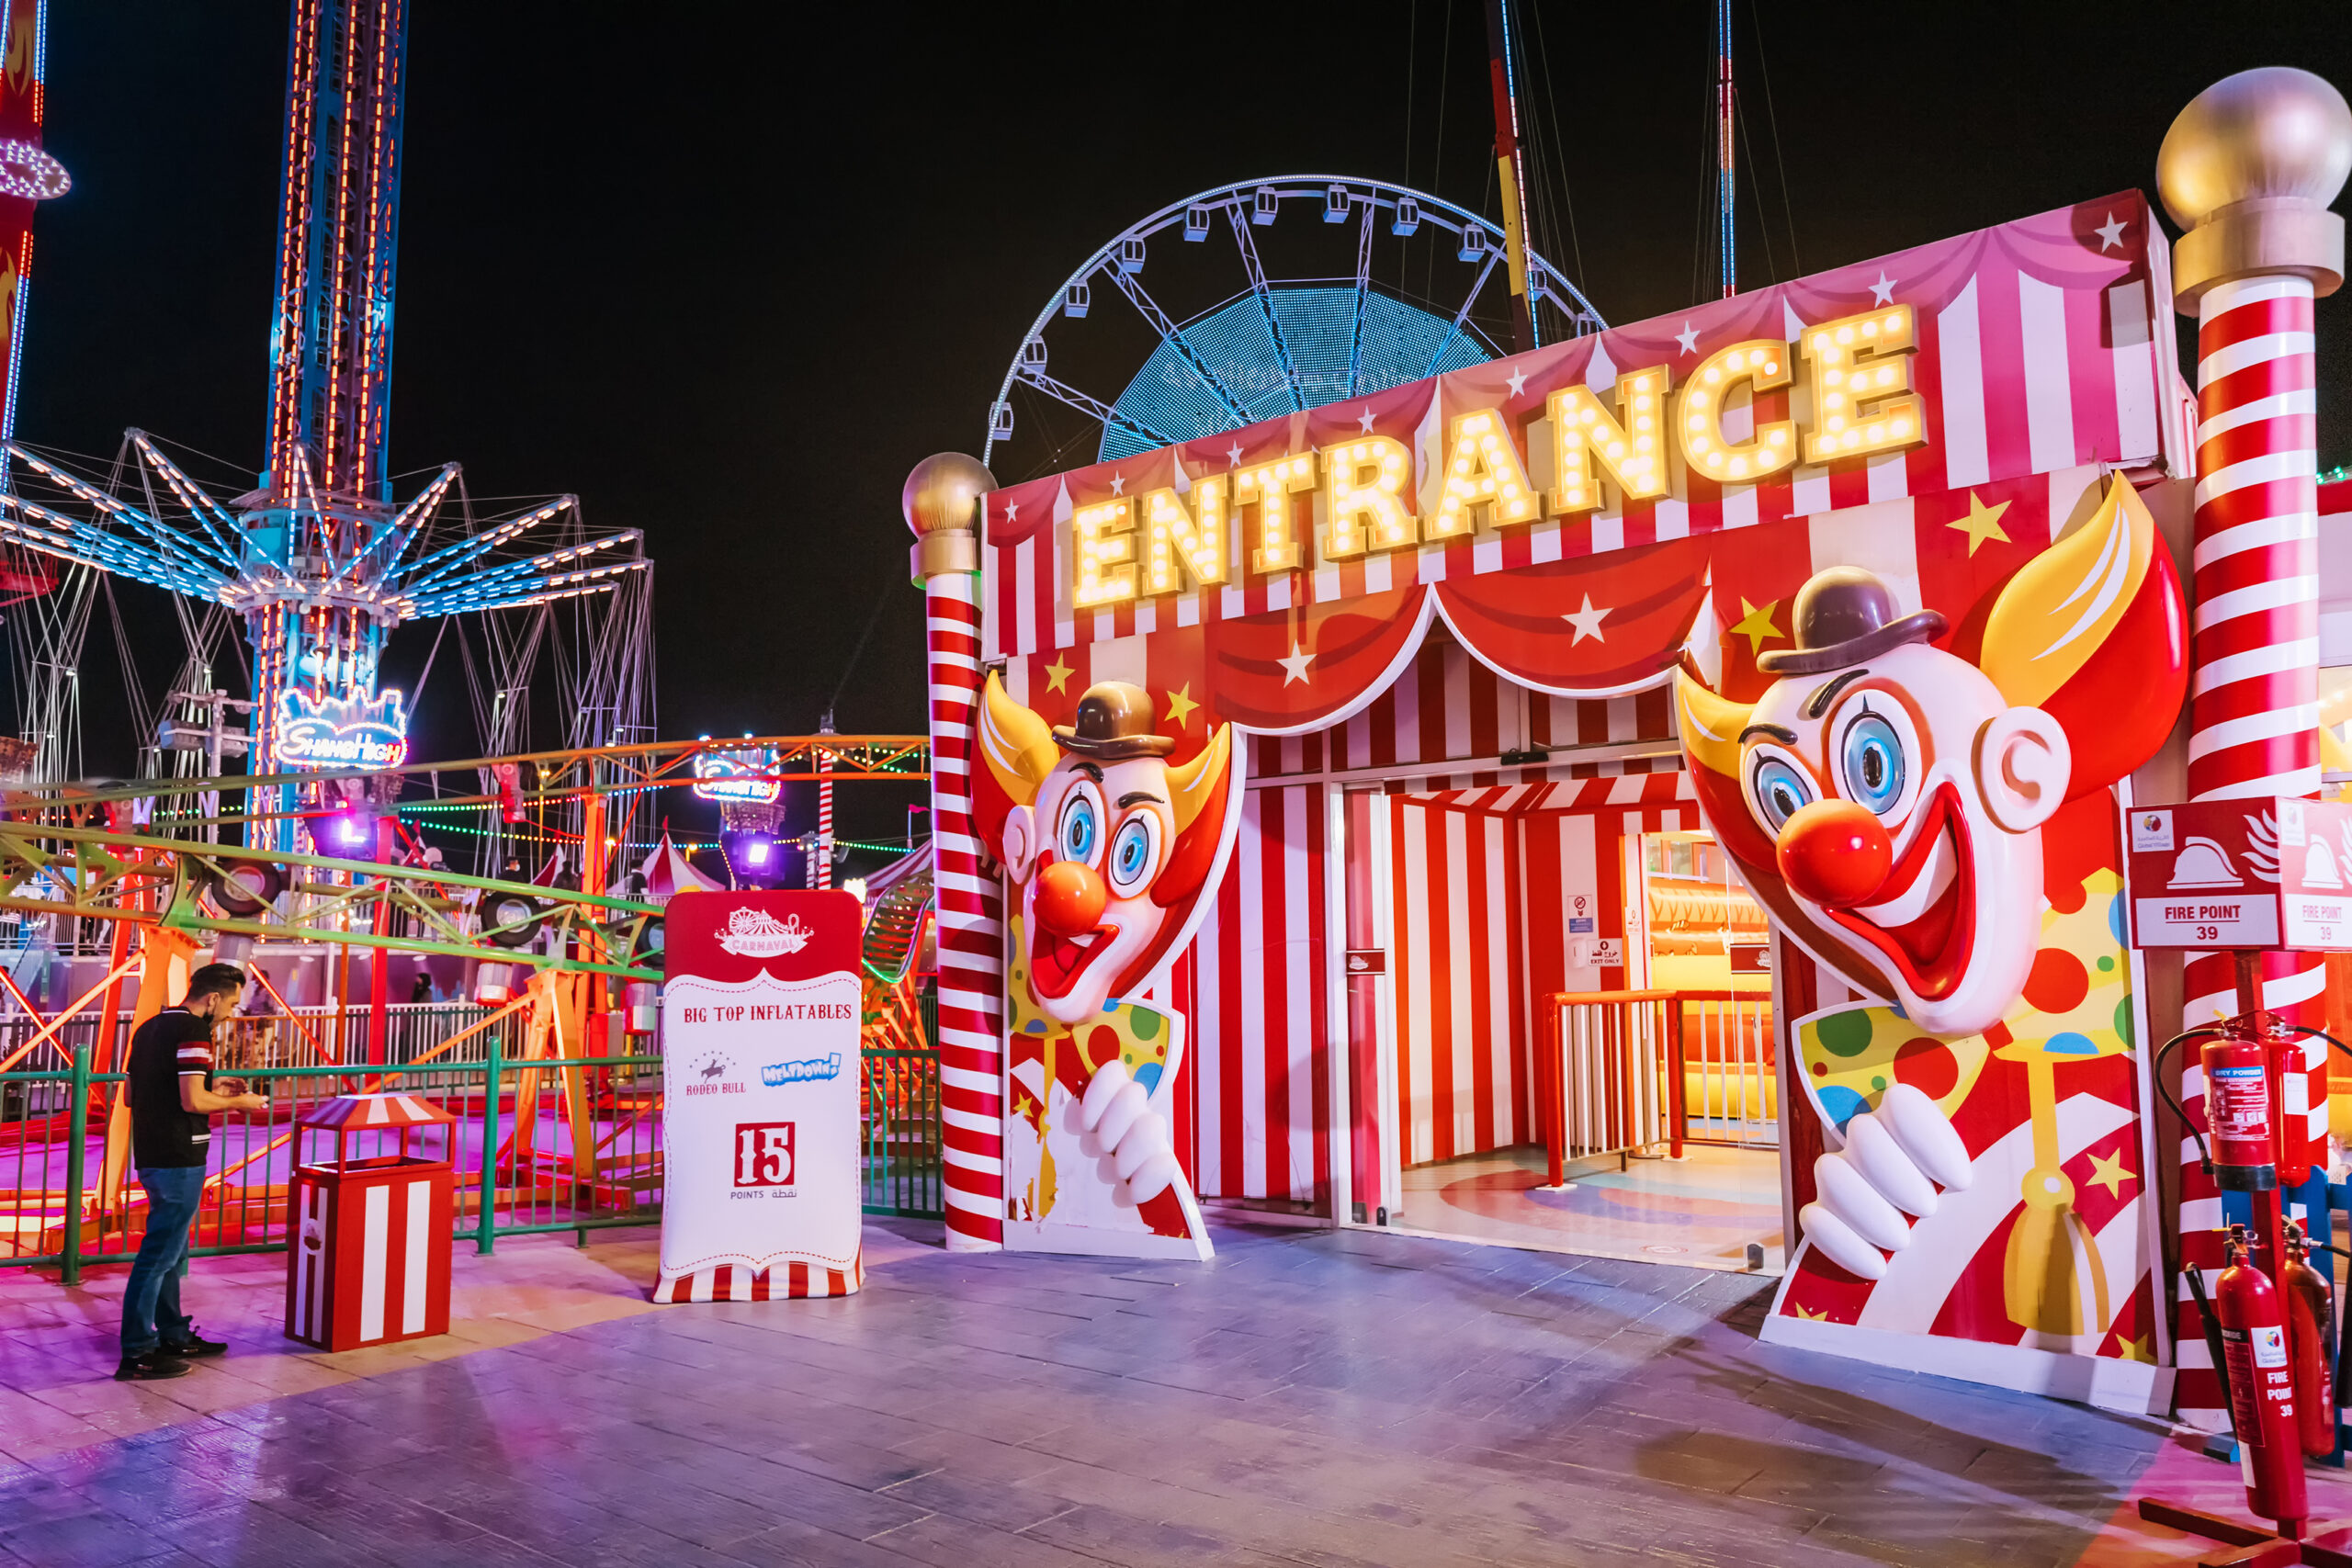 Global Village Dubai - Carnival amusement park